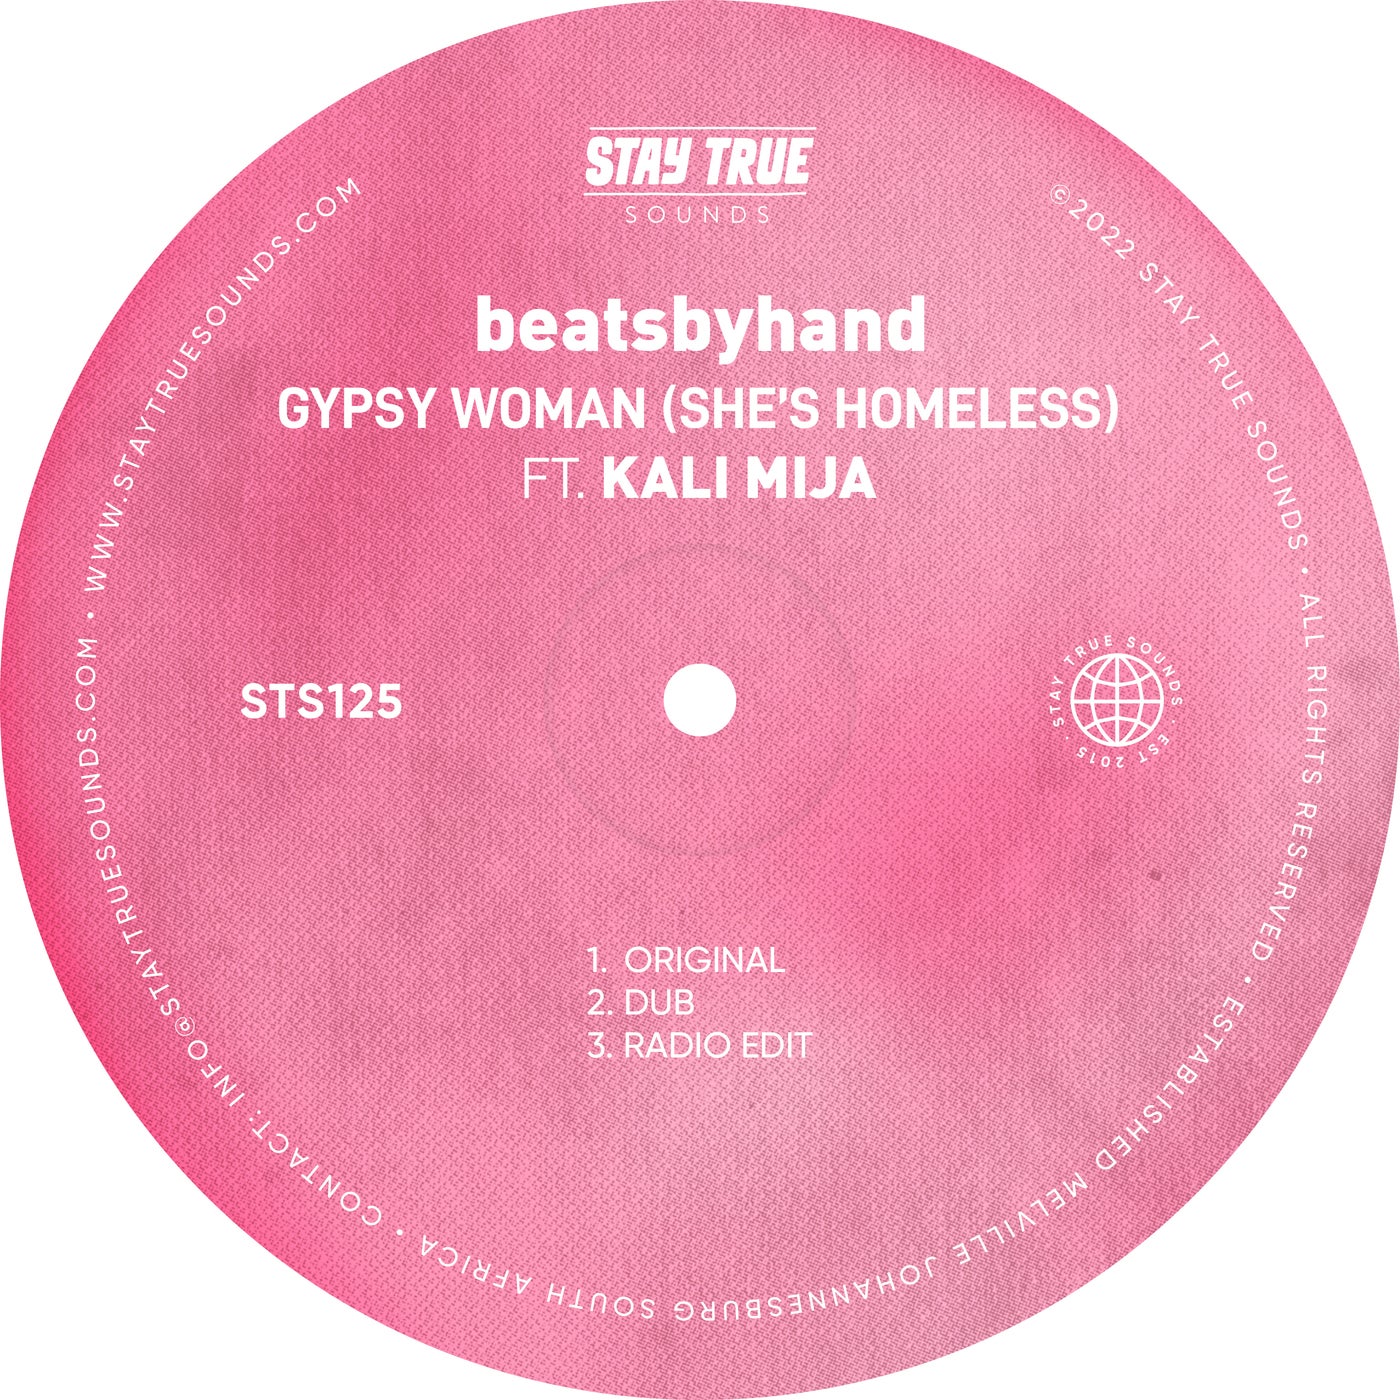 beatsbyhand - Gypsy Woman (She's Homeless) [feat. Kali Mija] [Stay True Sounds]